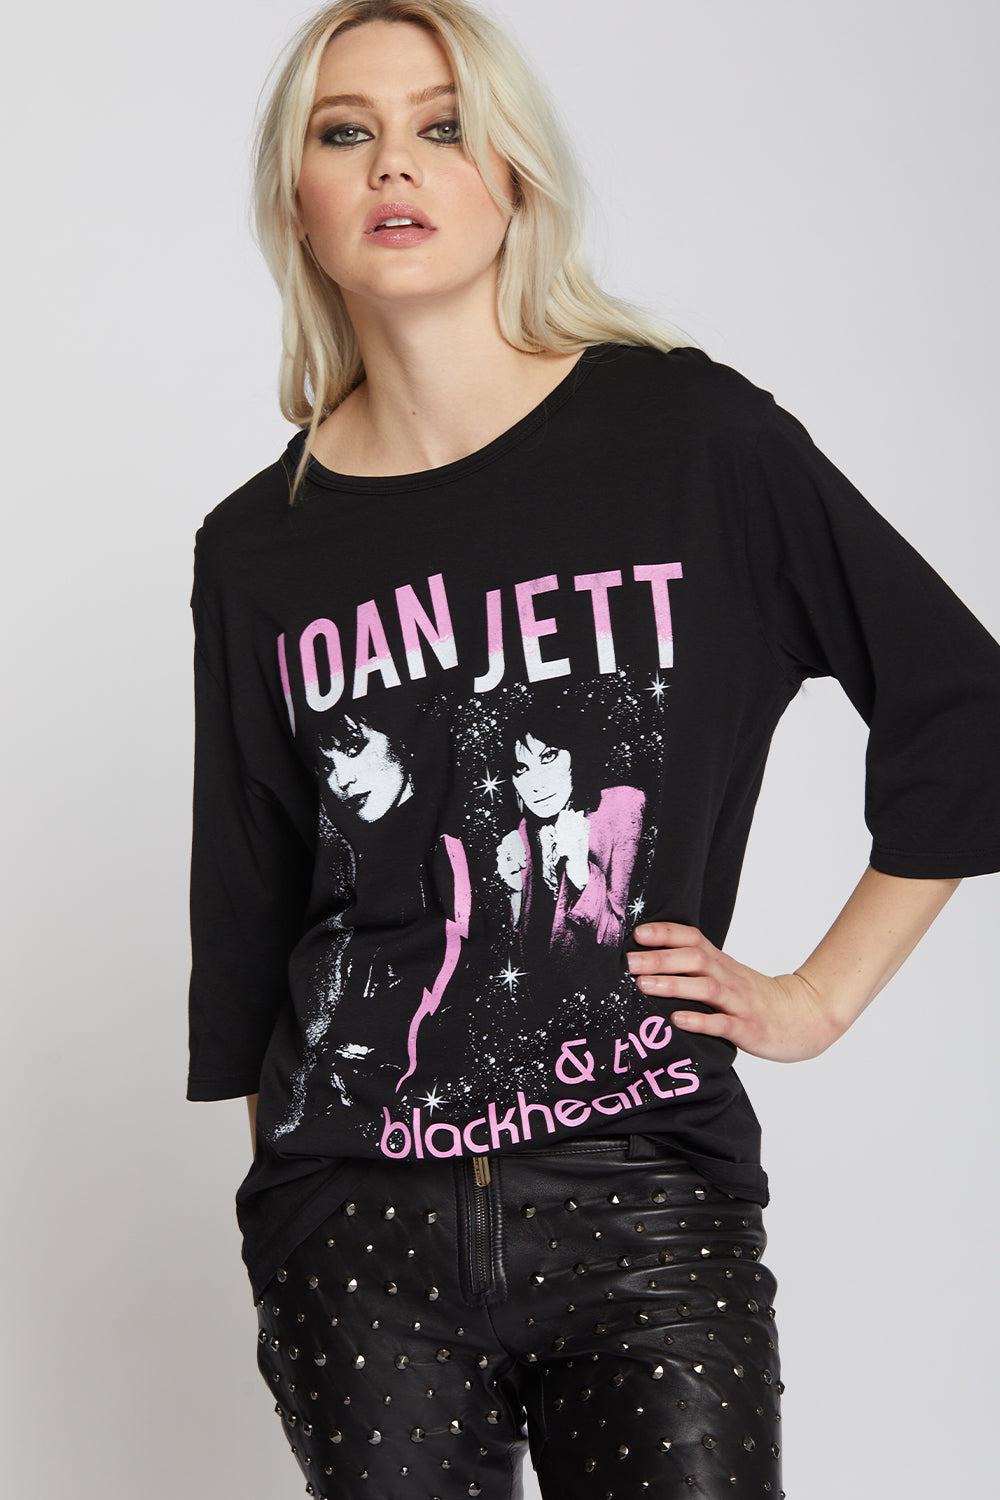 Joan Jett & The Blackhearts 3/4 Sleeve Tee by Recycled Karma Brands